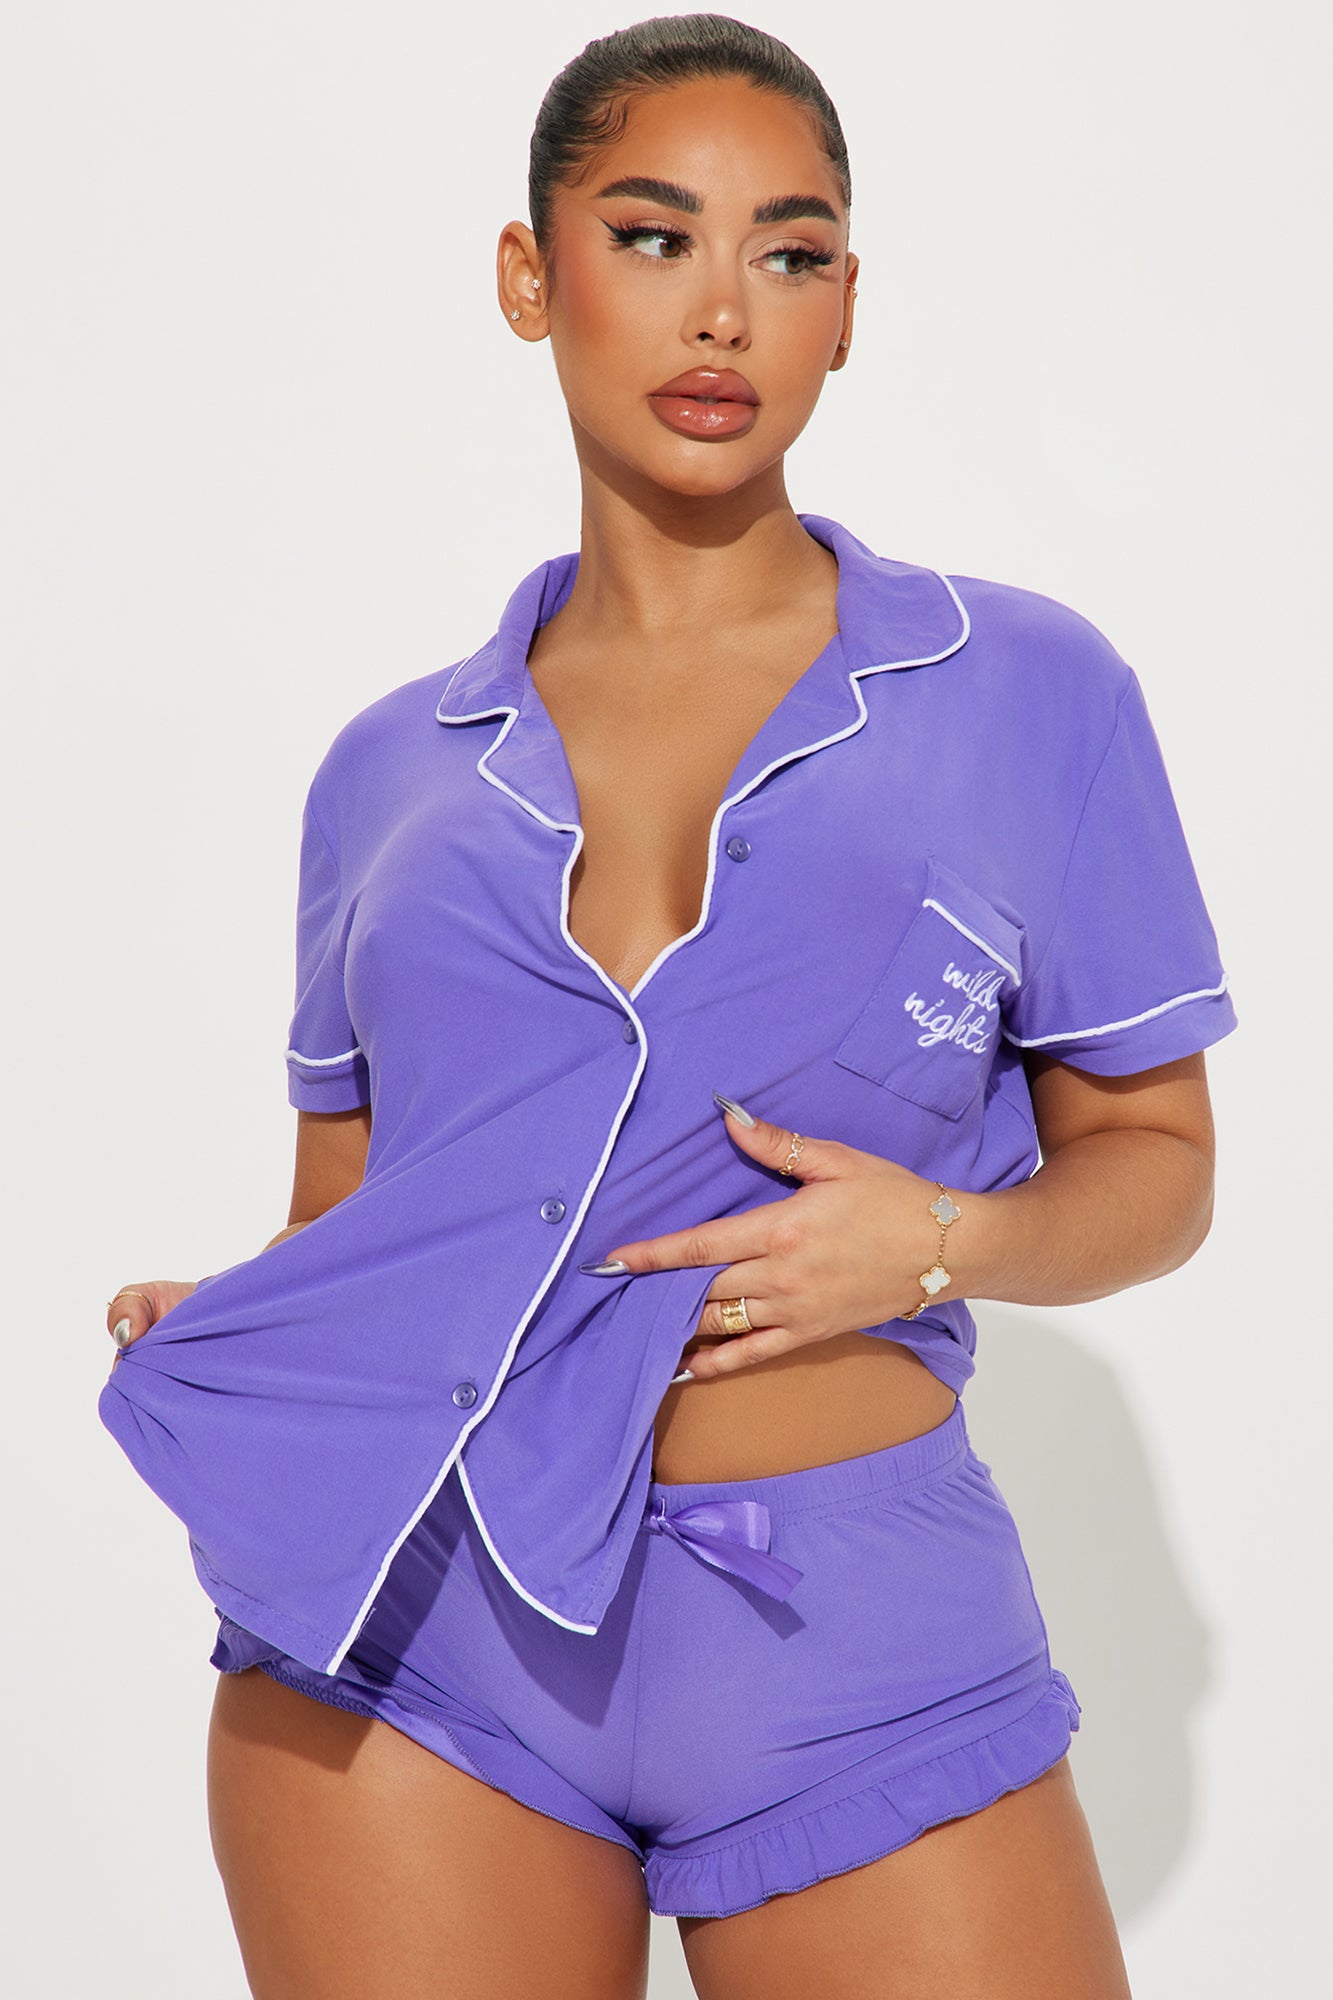 RH Women Pajamas Set Cami Crop Sleepwear Sexy Lingerie PJS Set